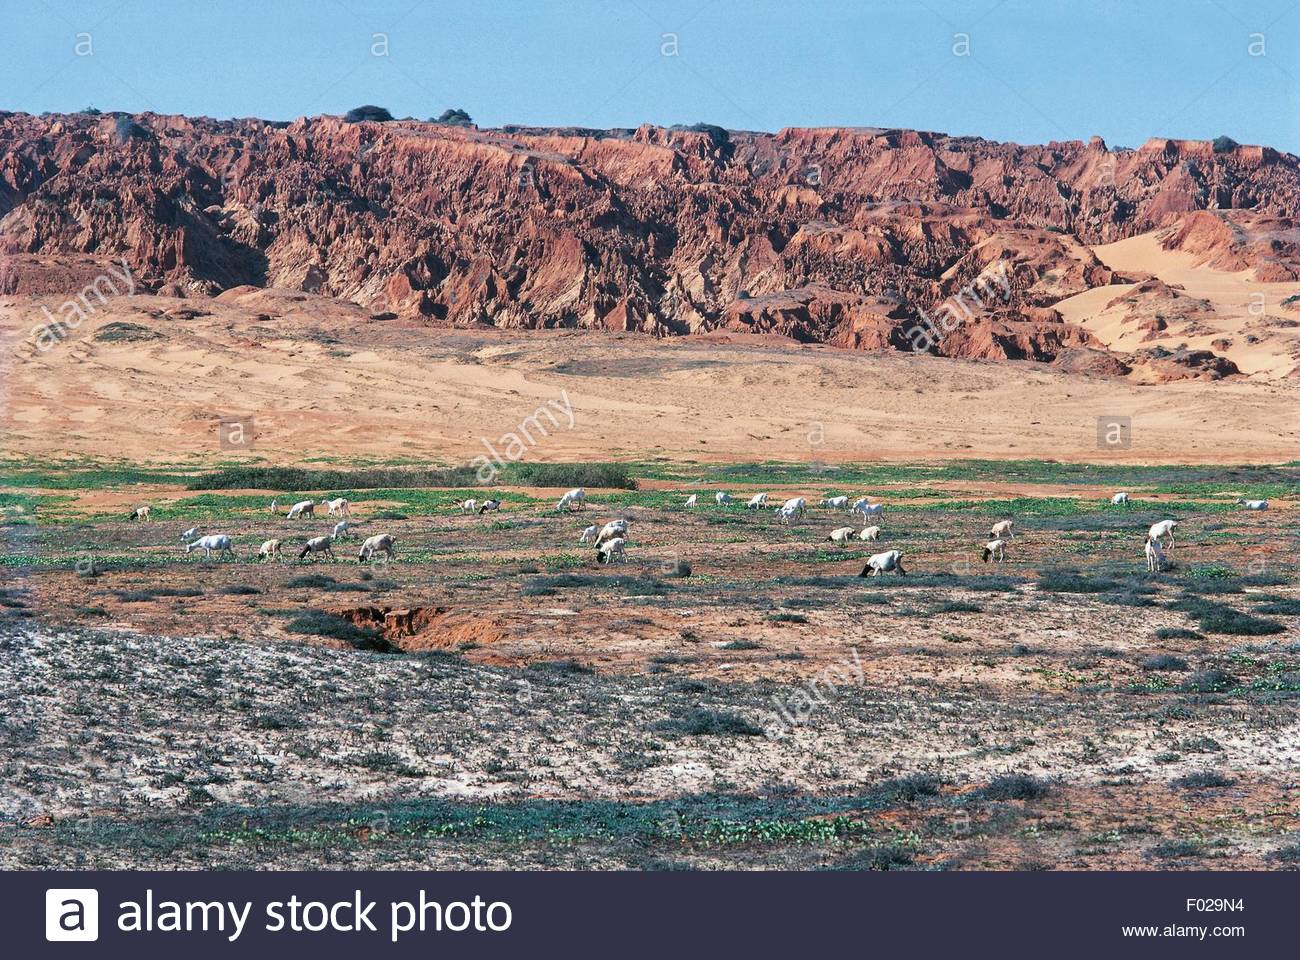 herd-of-goats-among-the-coastal-dunes-near-merca-somalia-F029N4.jpg